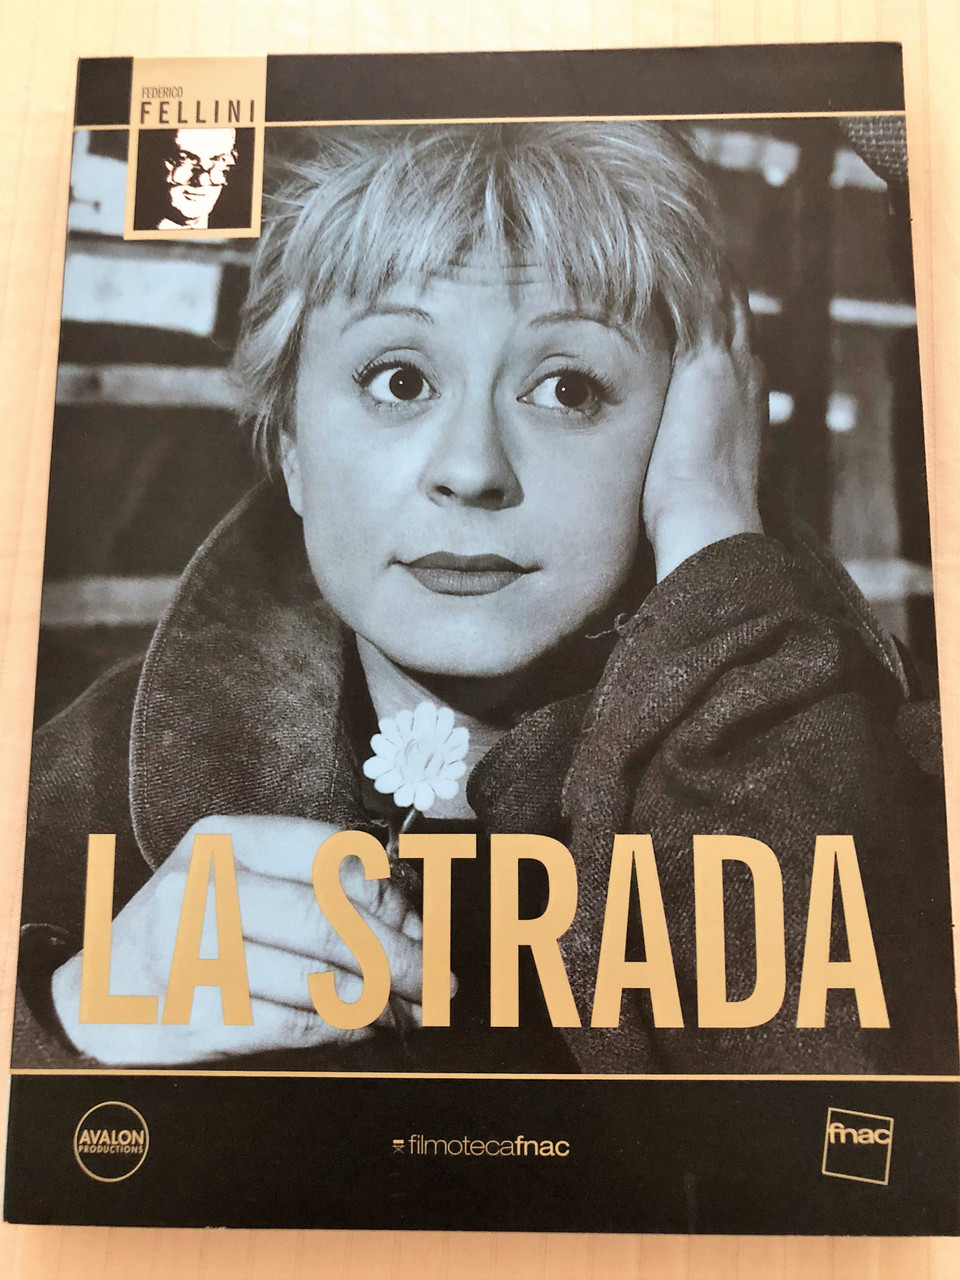 La Strada 2x DVD 1954 The Road / Directed by Federico Fellini / Starring:  Giulietta Masina, Anthony Quinn, Richard Basehart / Spanish DVD Release -  bibleinmylanguage